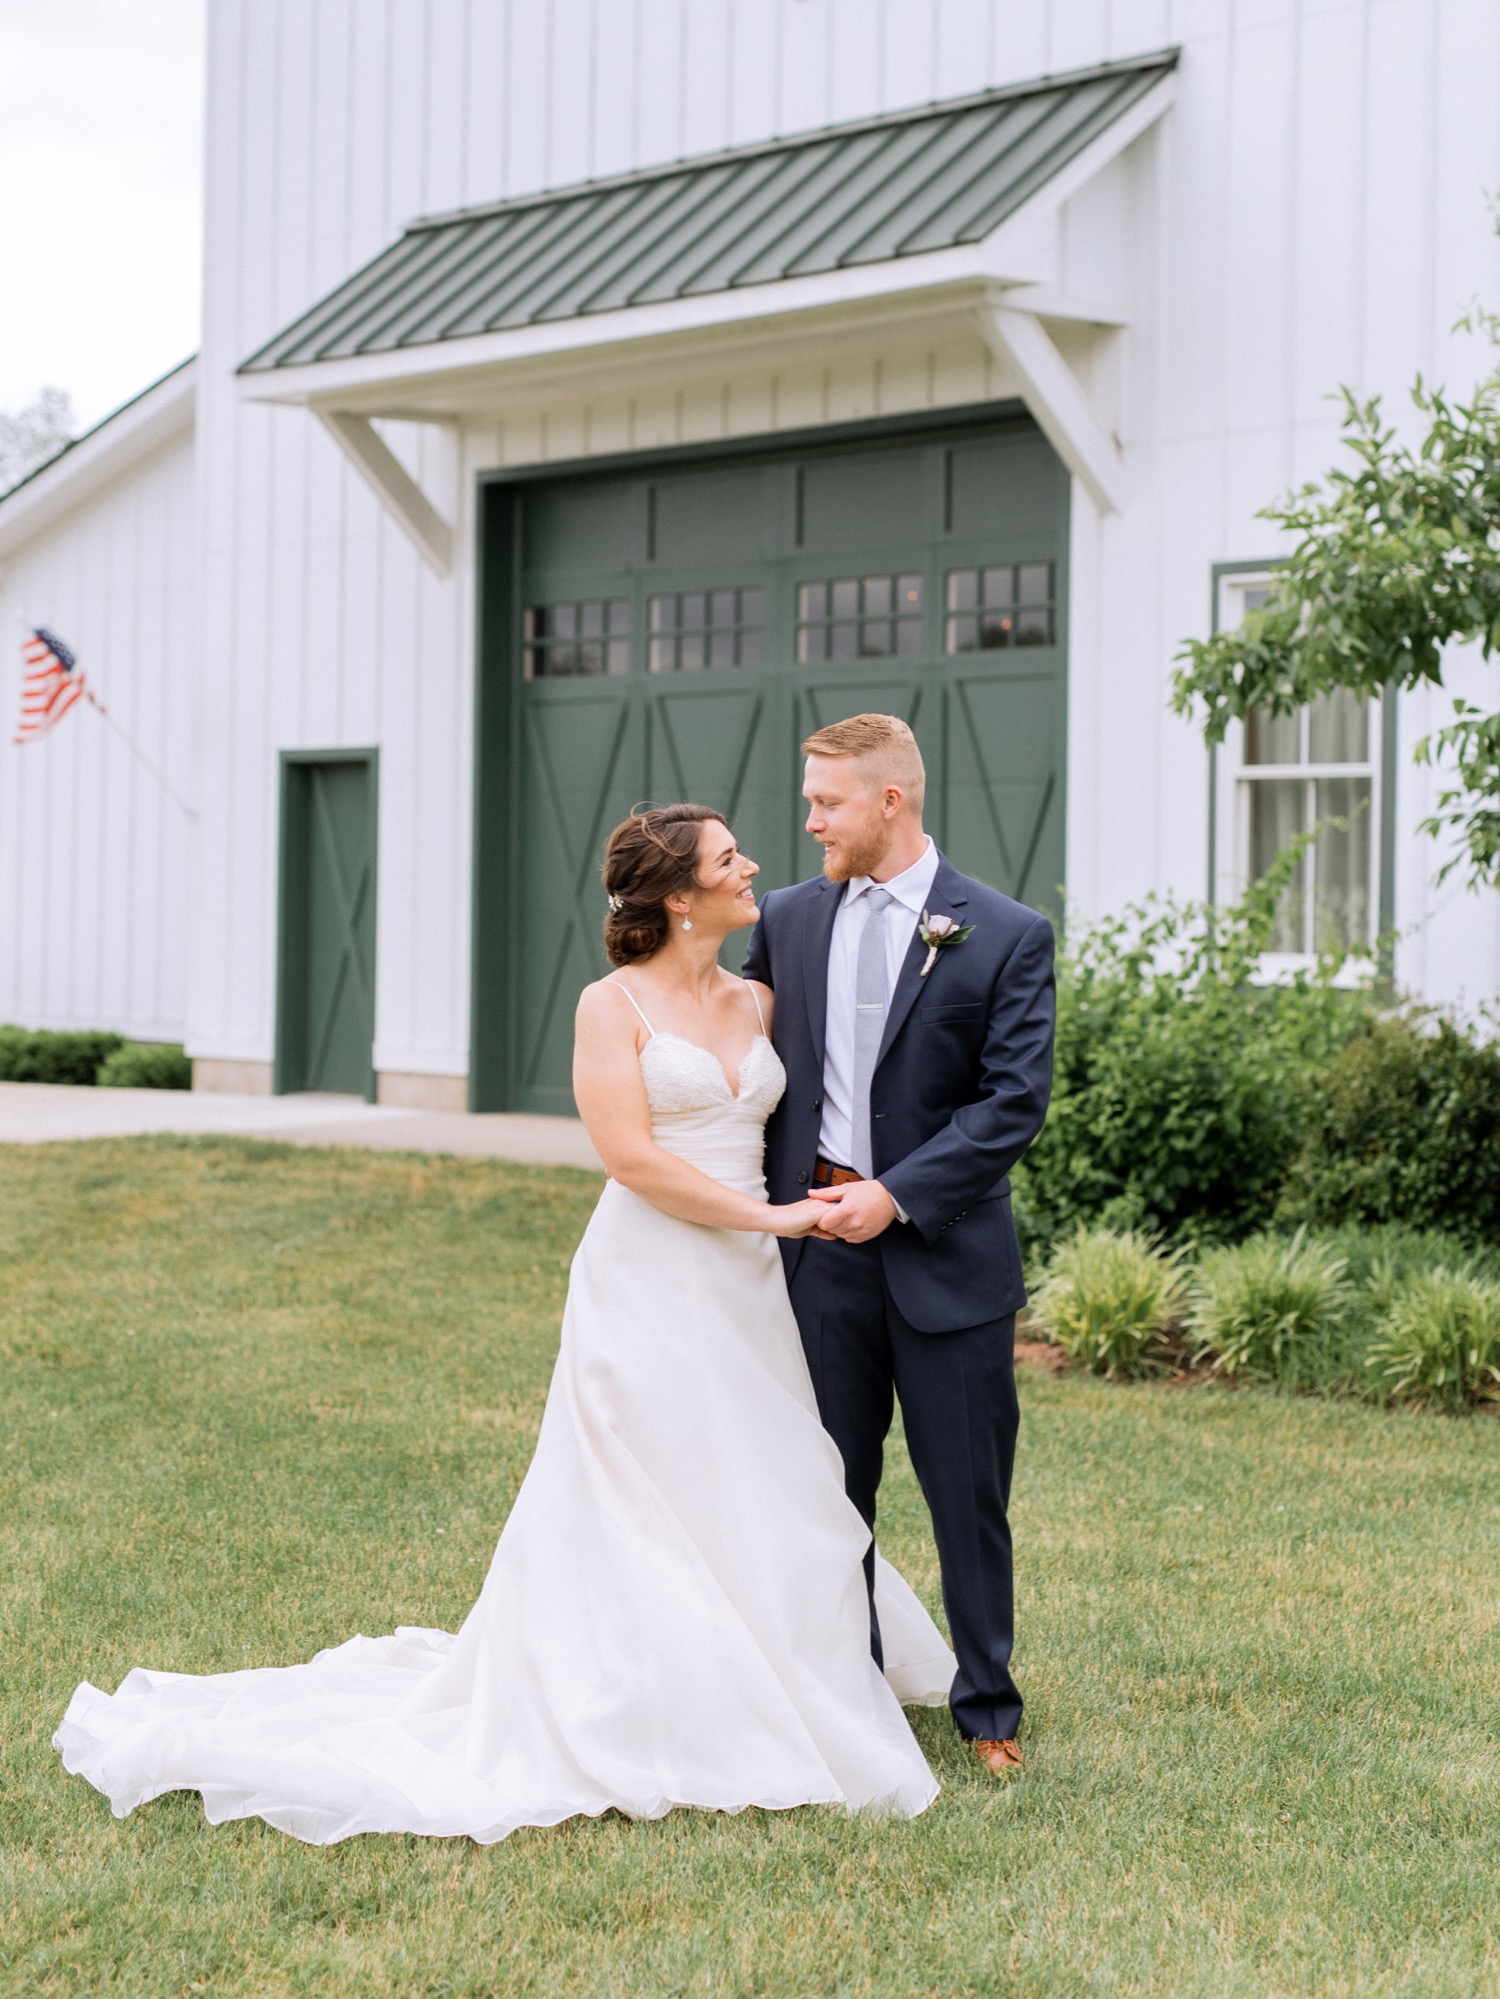 first look between bride and groom before wedding ceremony in Charlottesville, VA